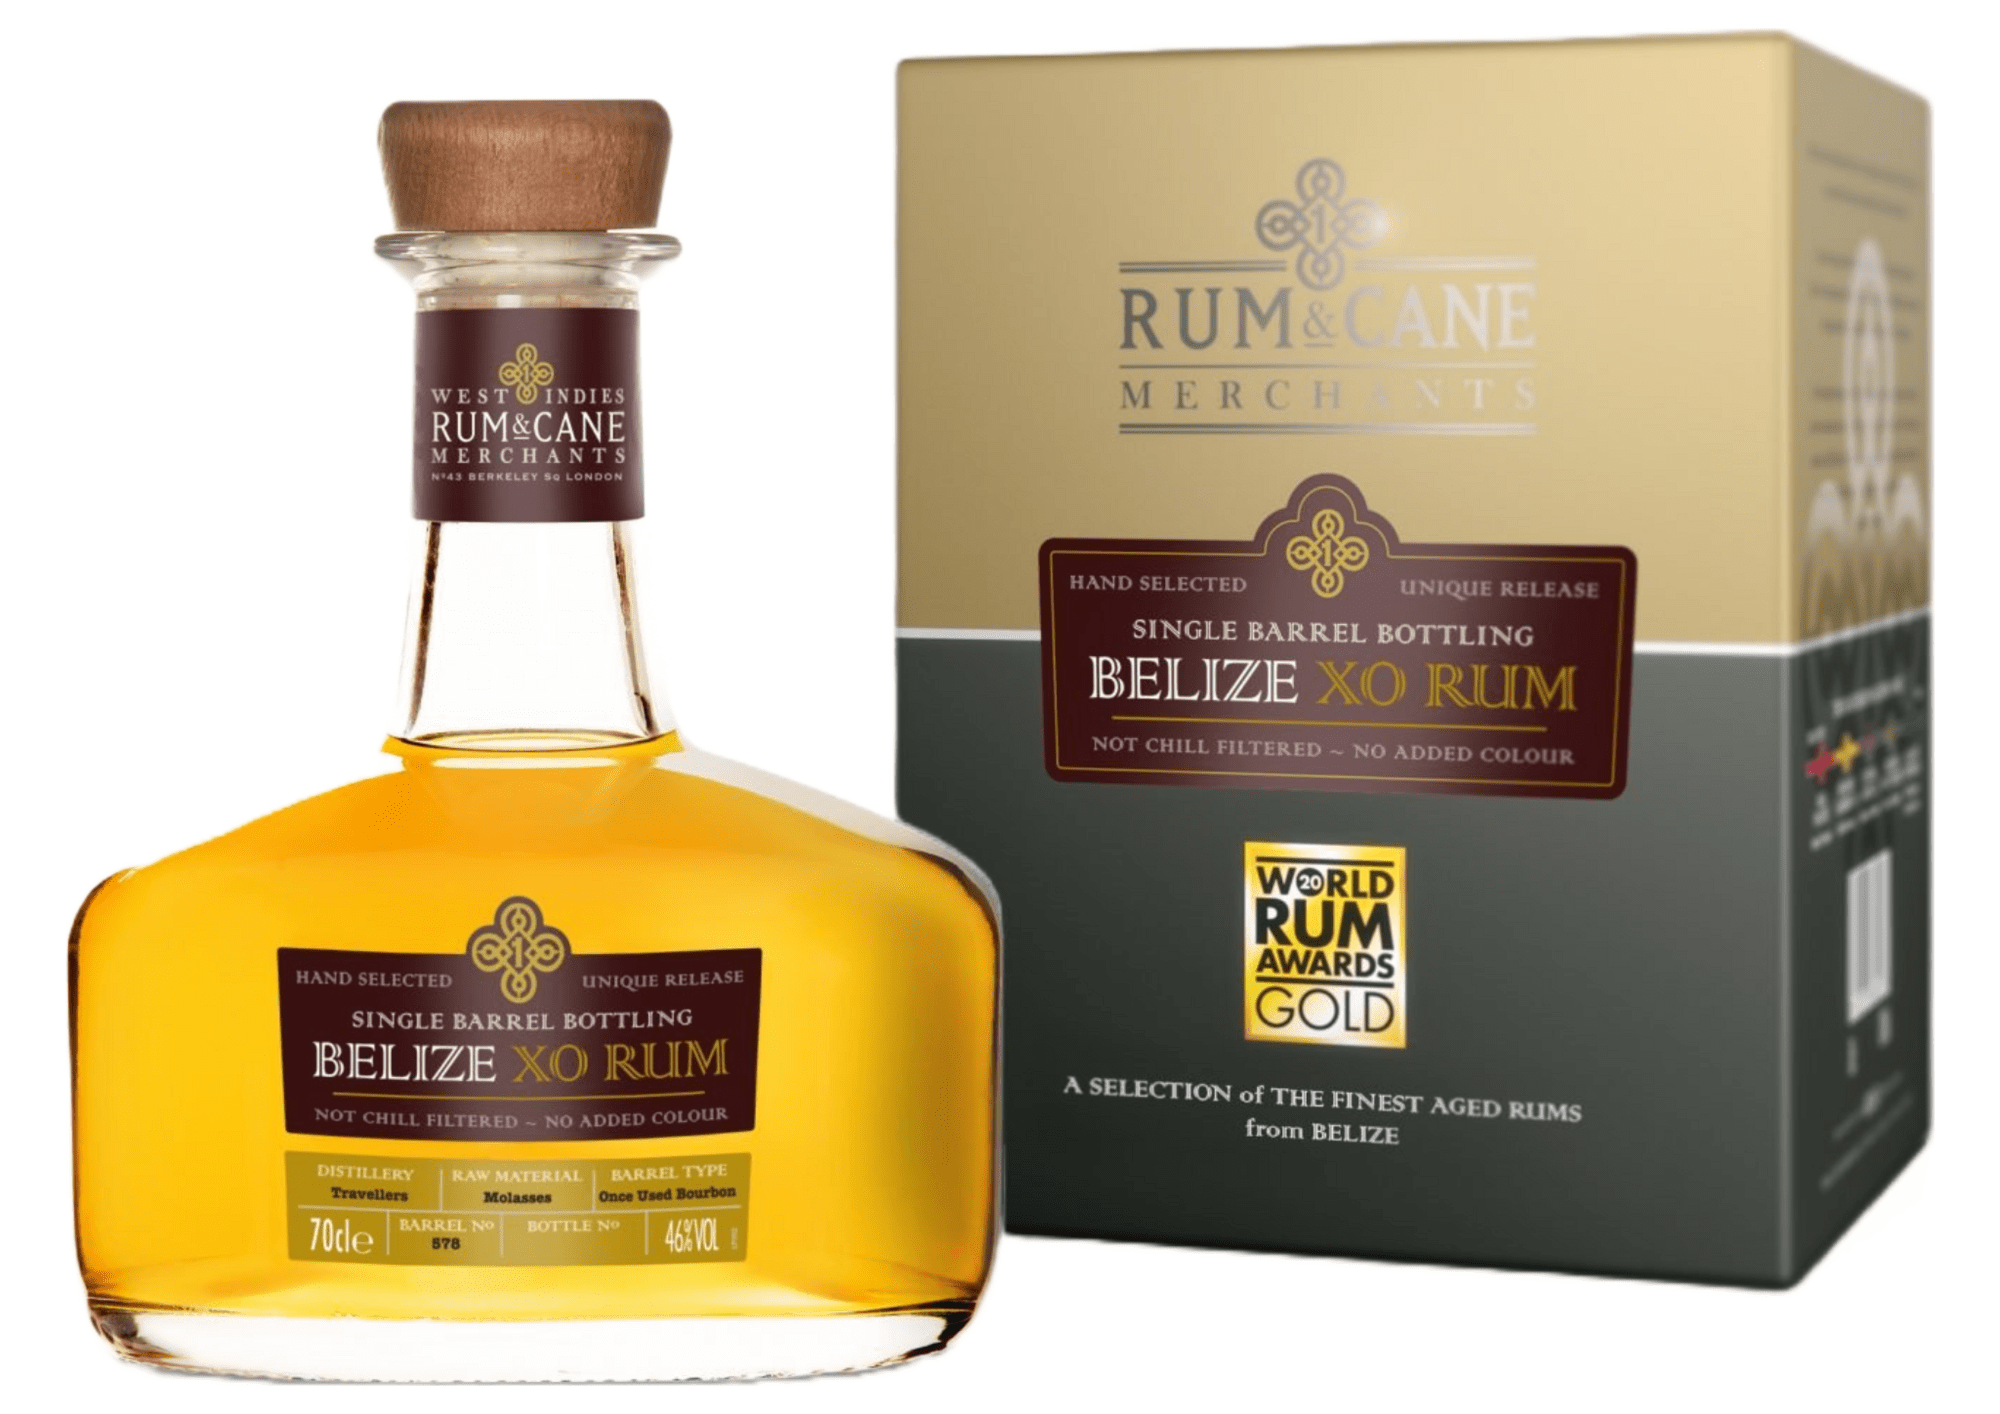 Rum & Cane Belize XO, GIFT